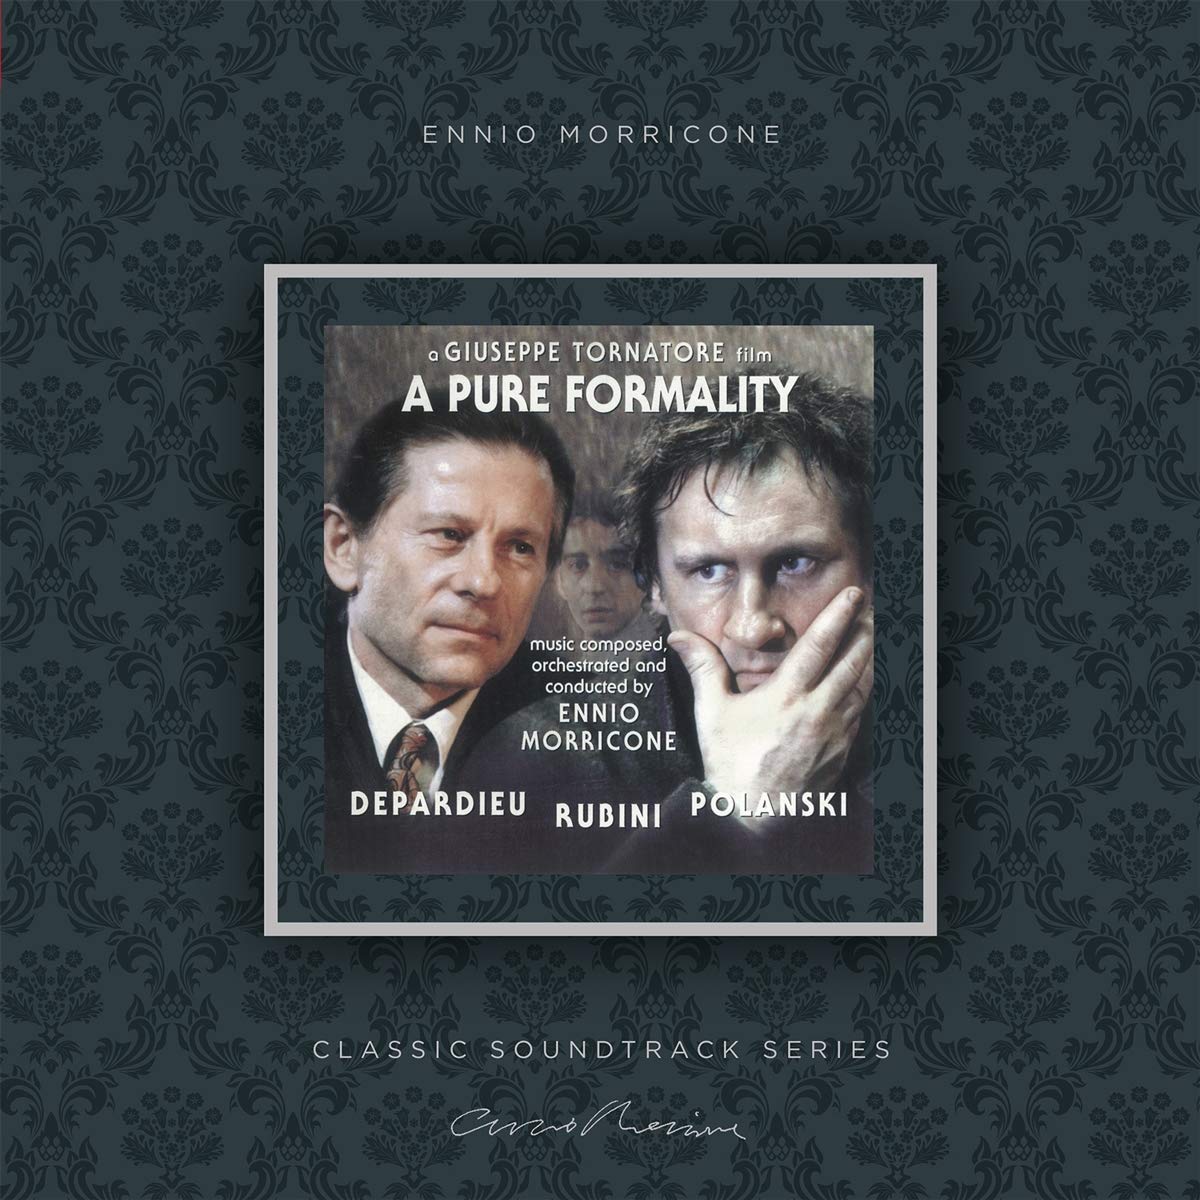 A PURE FORMALITY: Original Motion Picture Soundtrack (Ennio Morricone) LP